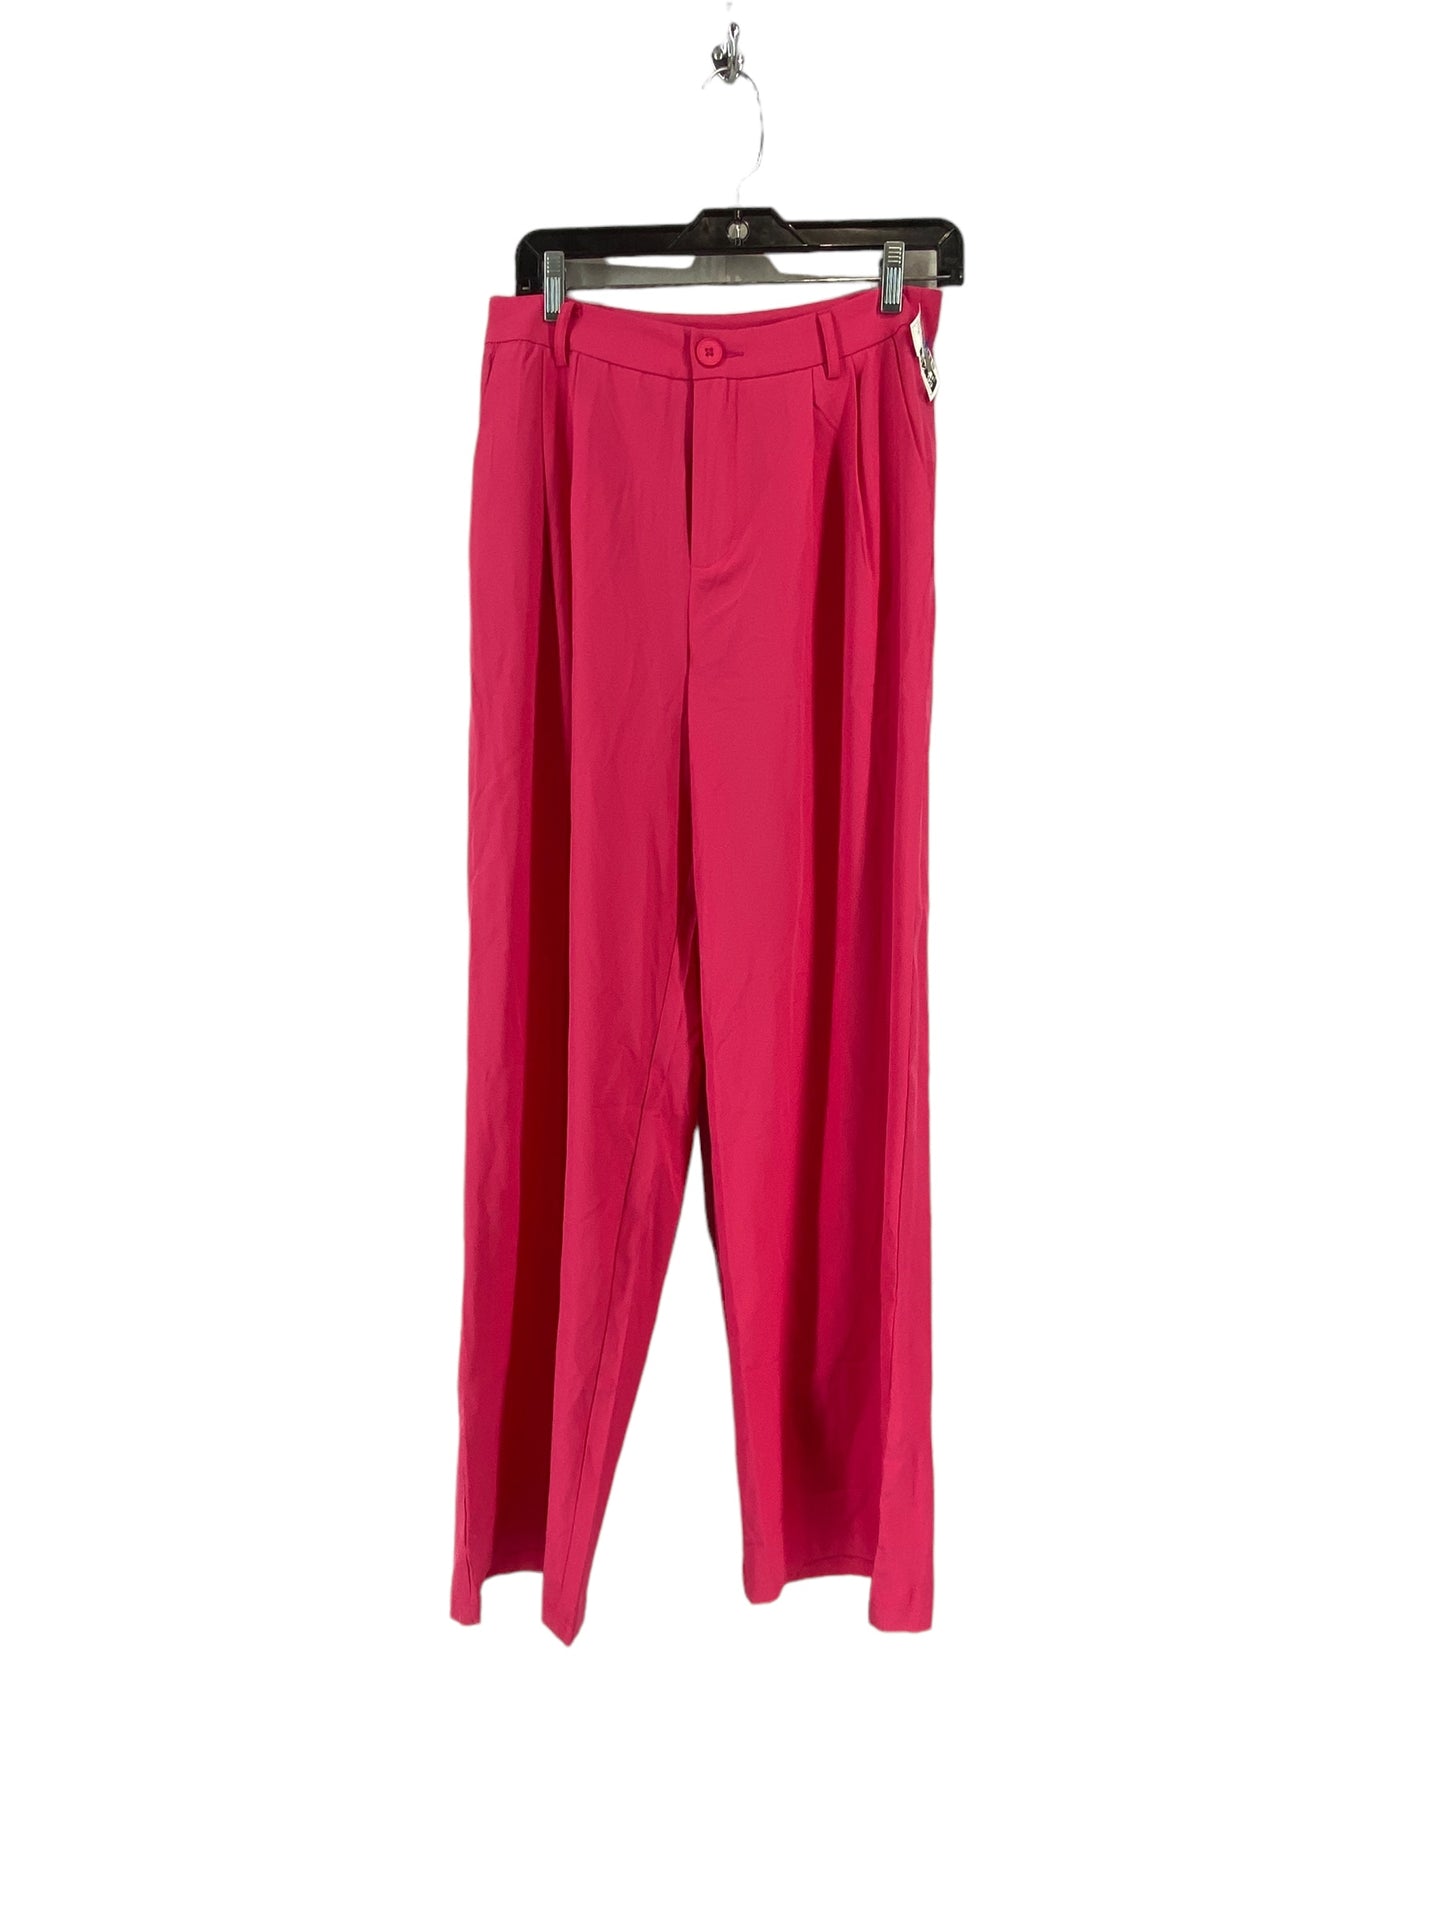 Pink Pants Dress Clothes Mentor, Size M